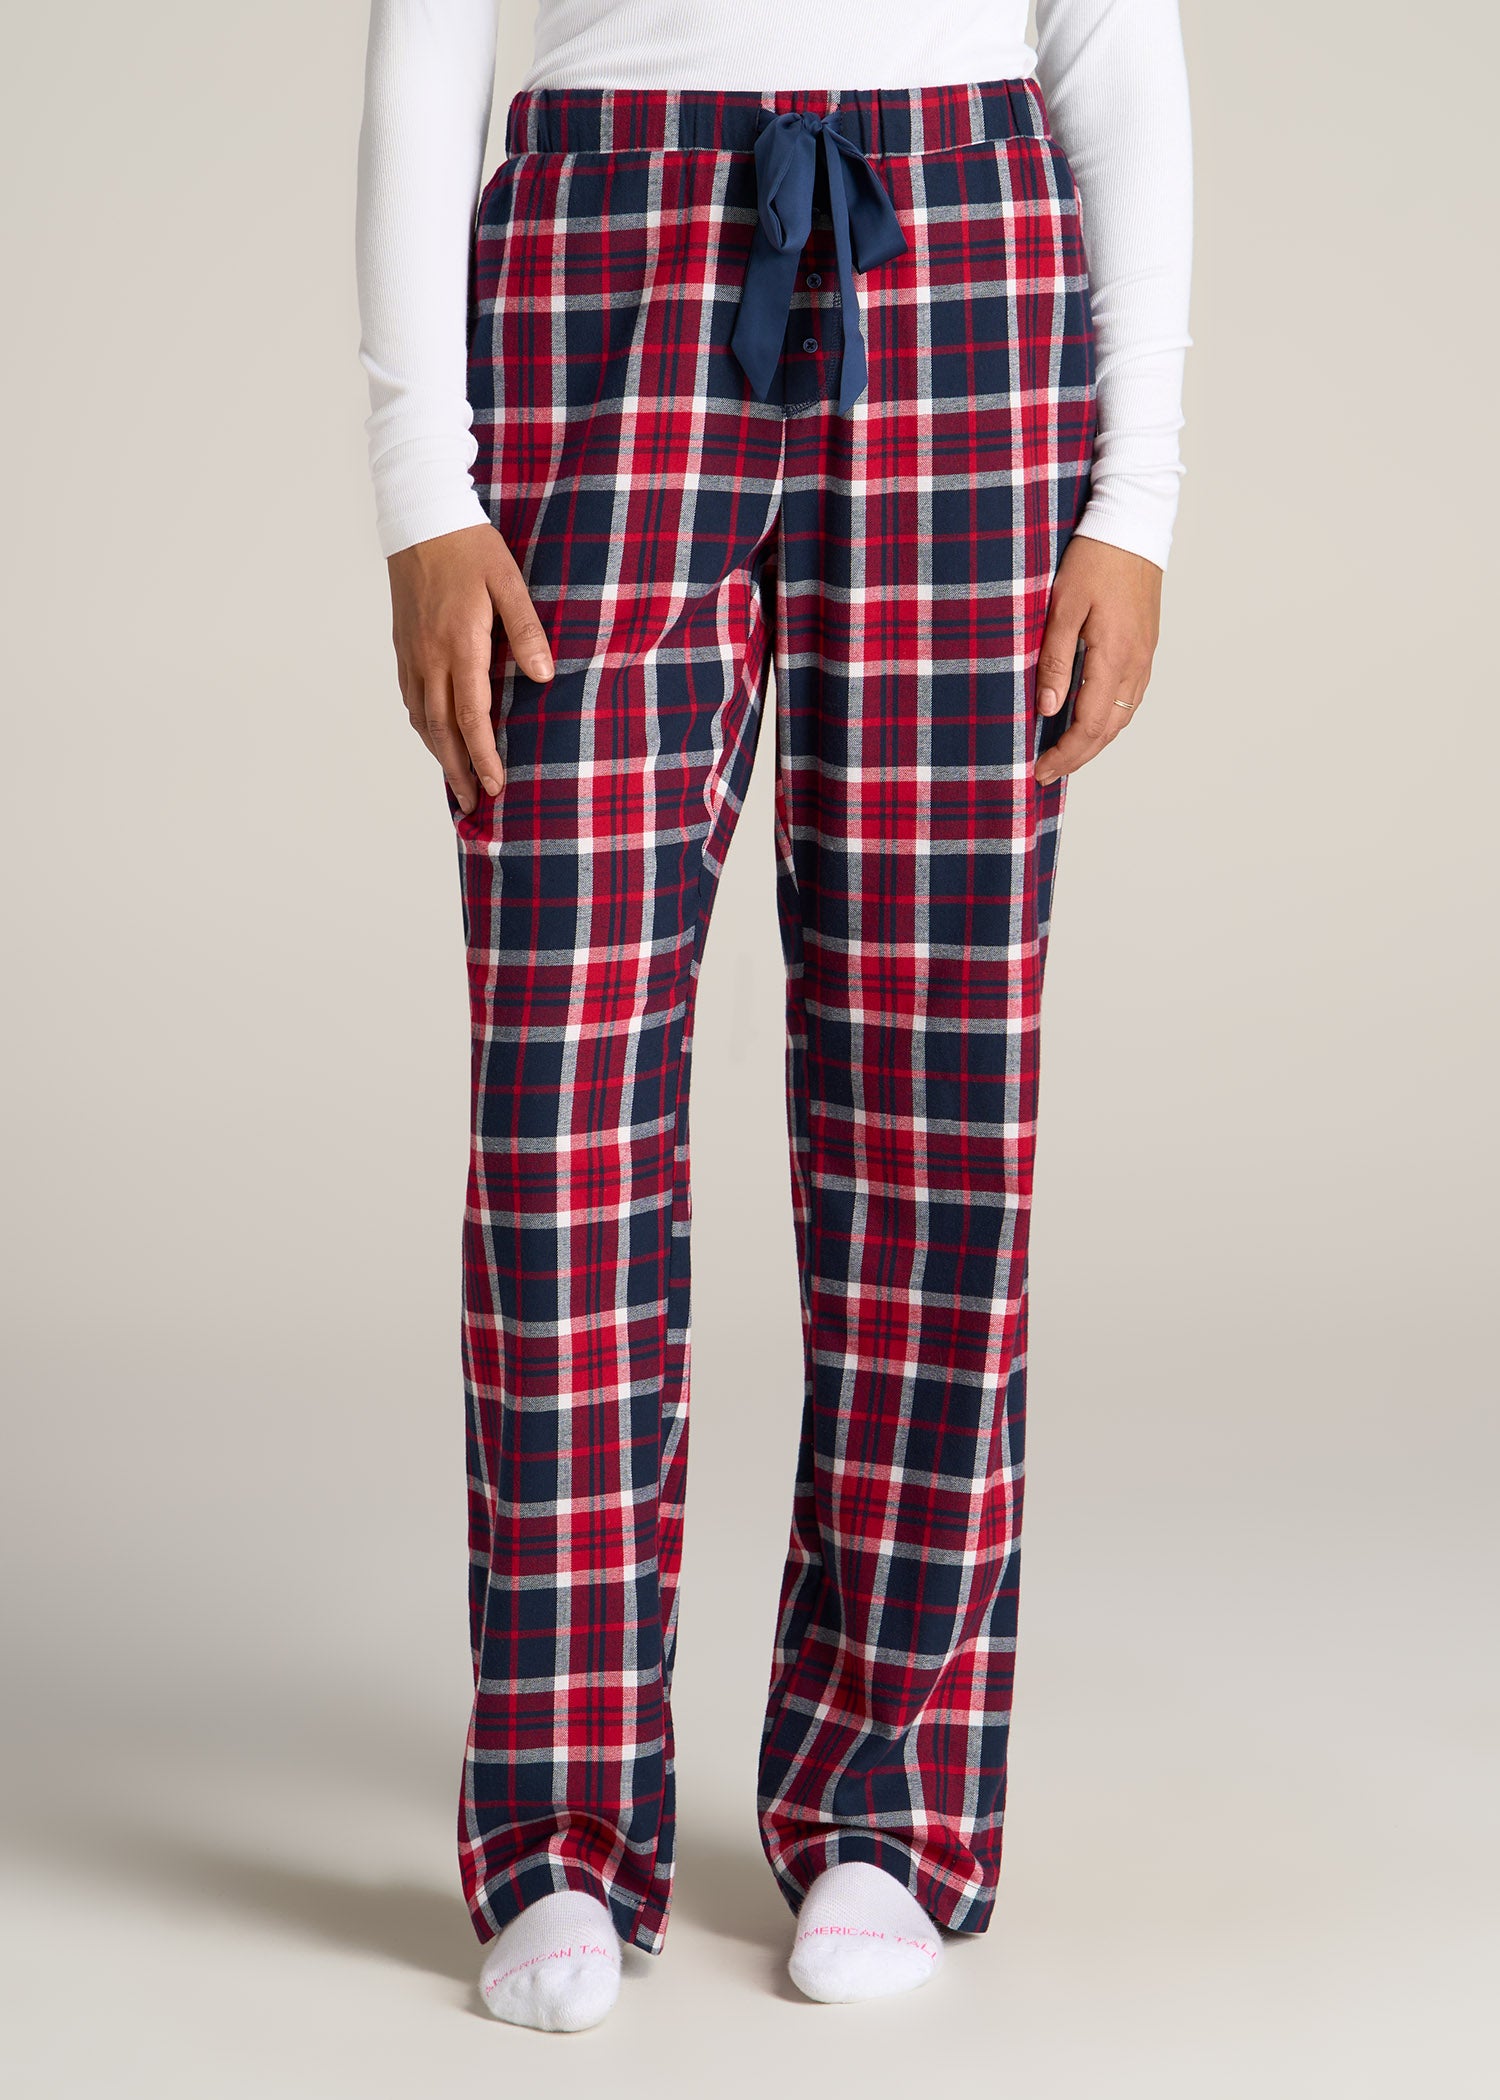 Flannel Women's Tall Pants | Tall